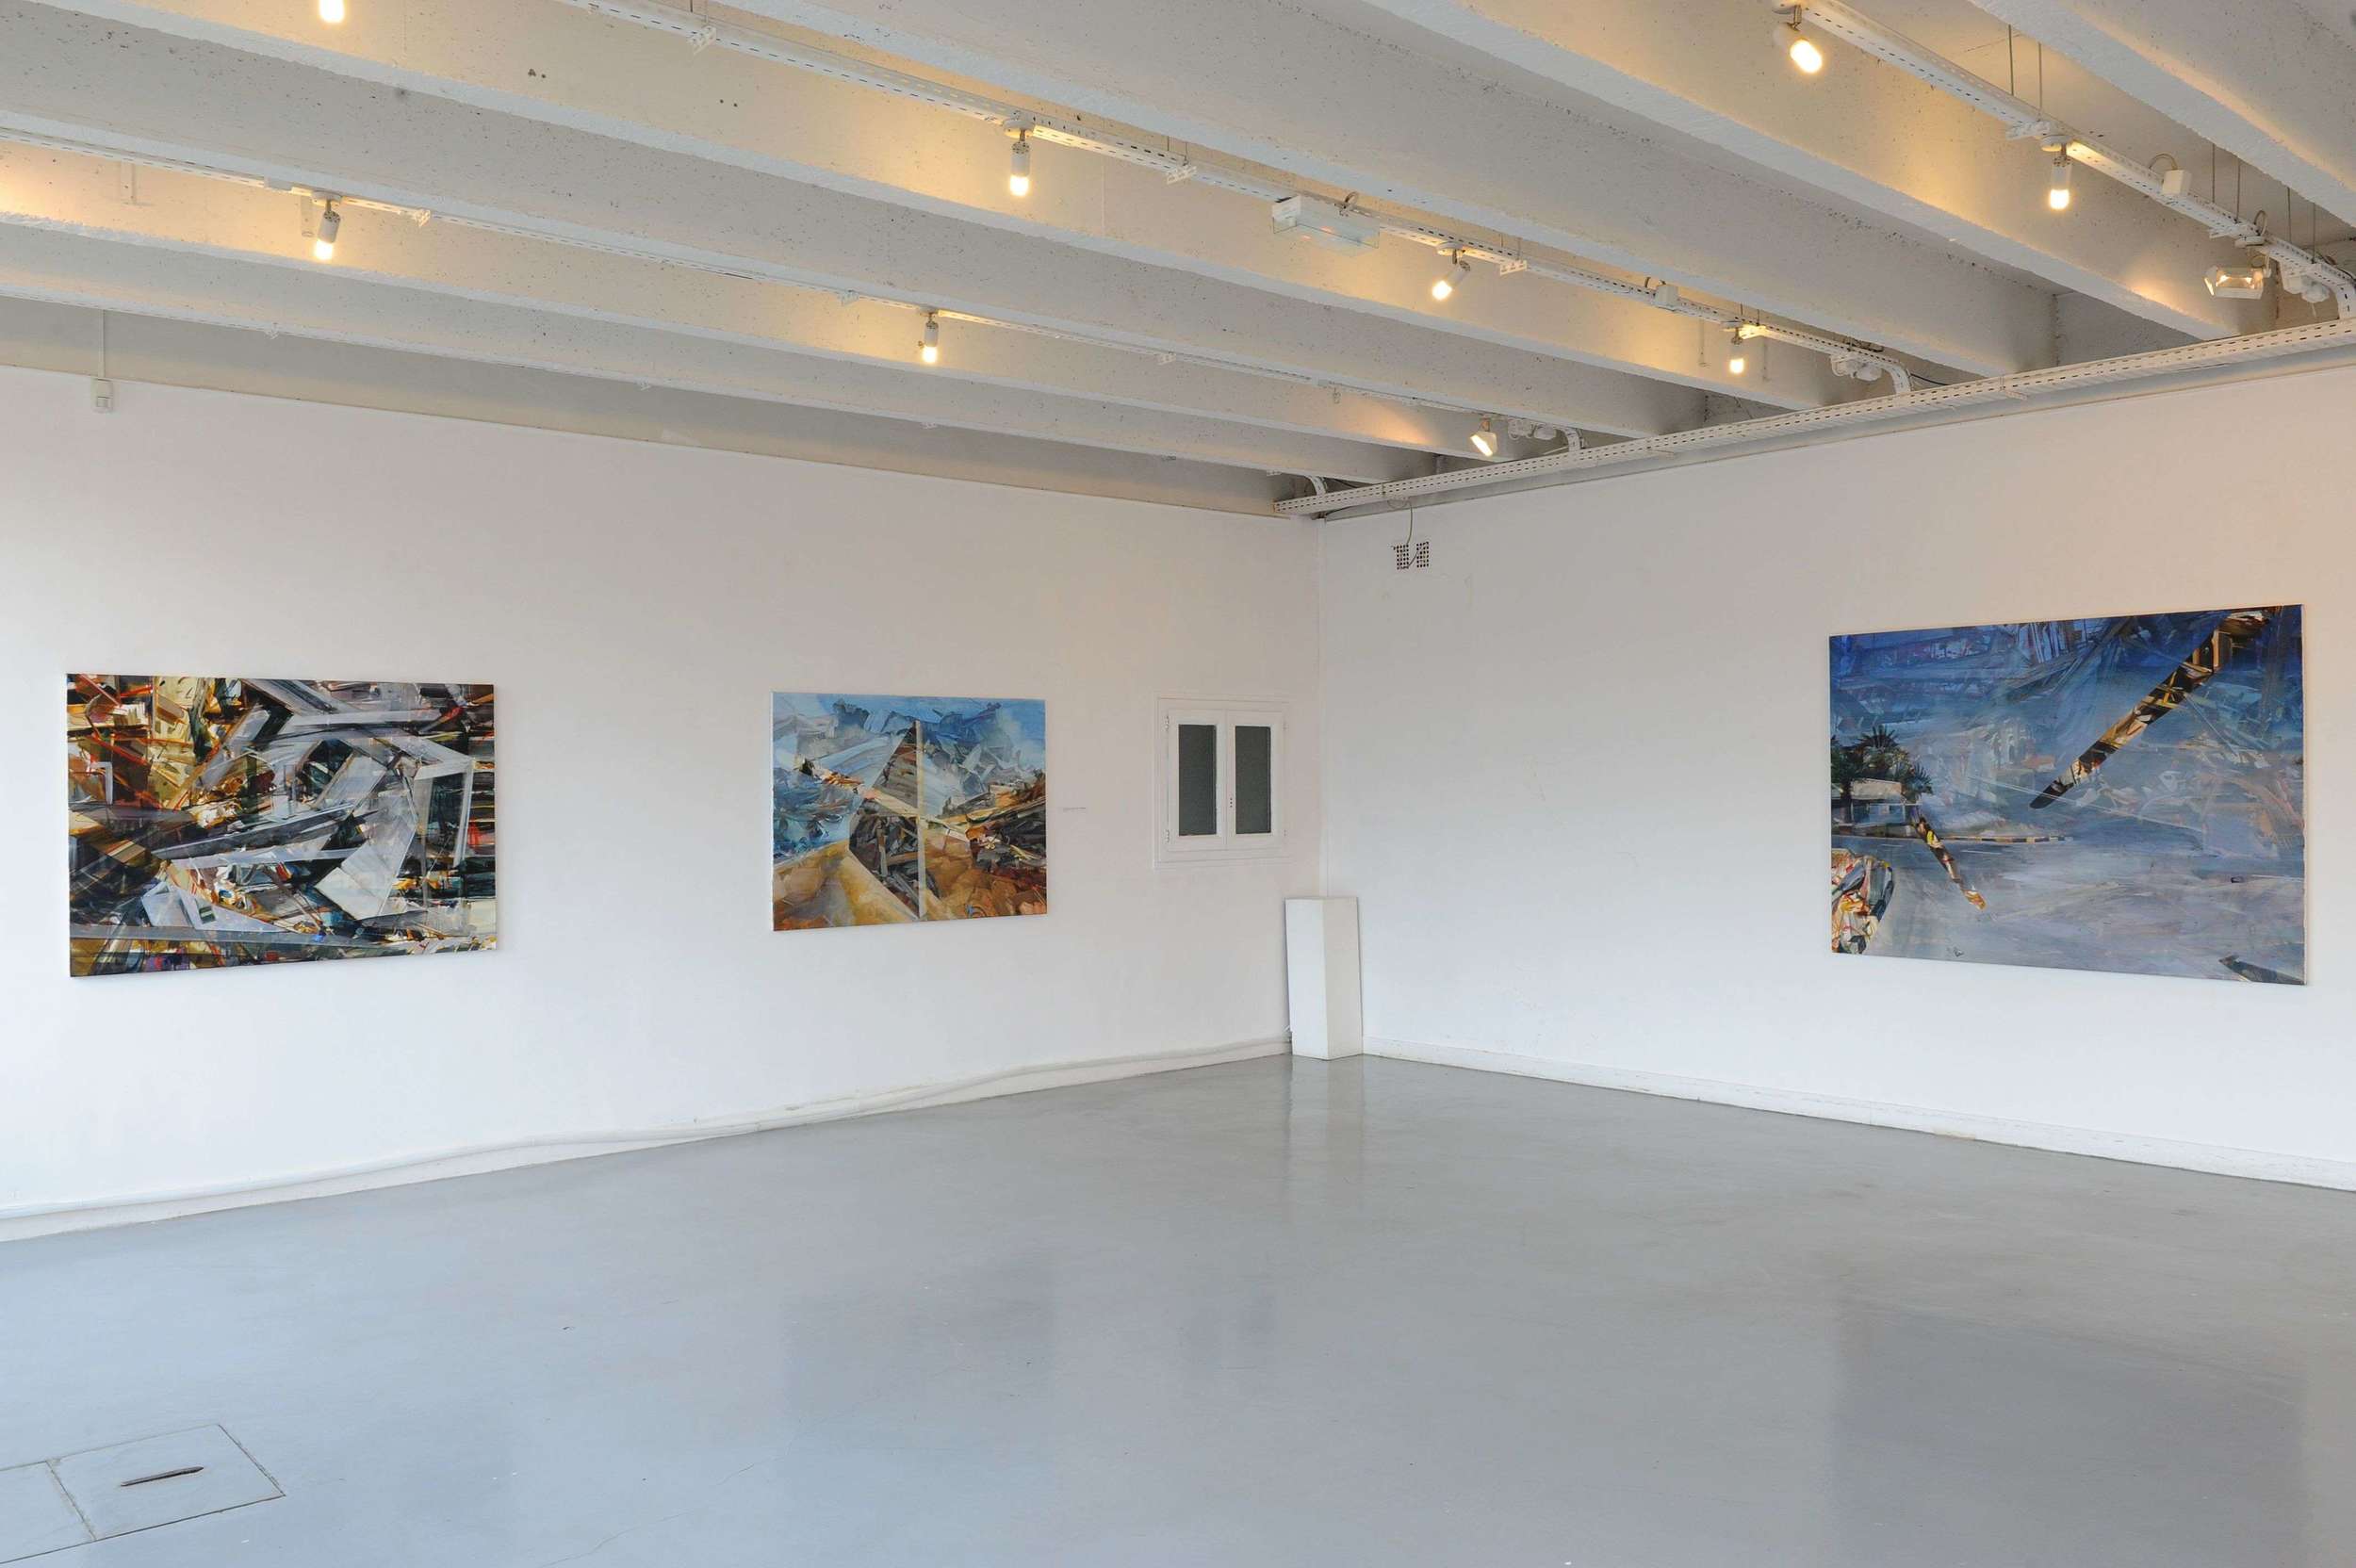   Shake Break Bounce ,&nbsp;Julio Gonzales Gallery, and Maison Marin Beaux-Arts,&nbsp;Arcueil (FR) 2012 